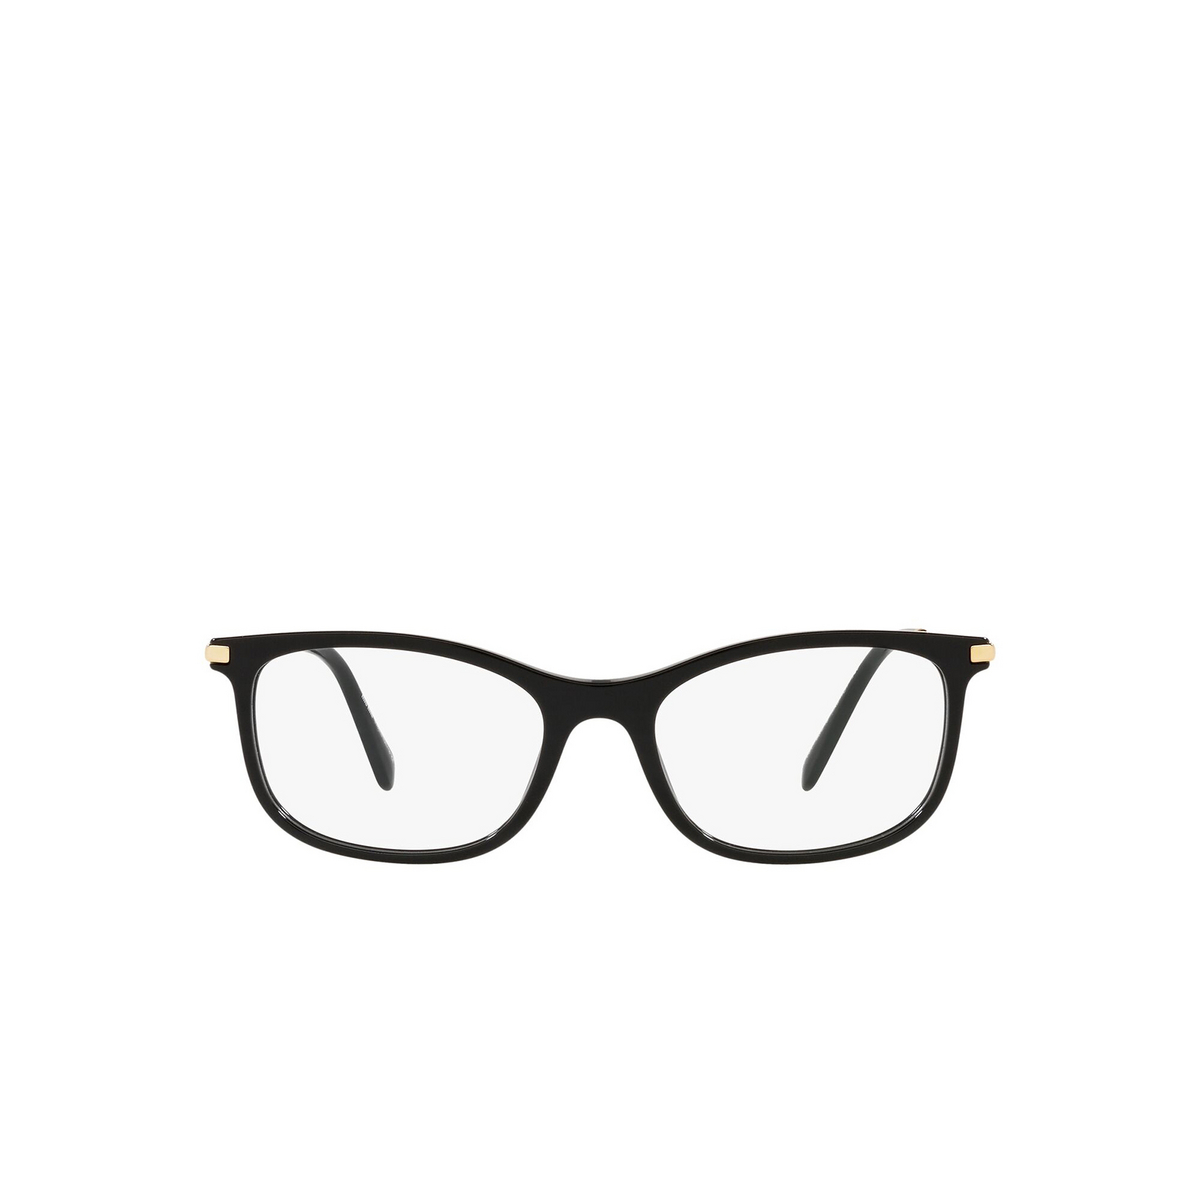 Miu Miu® Rectangle Eyeglasses: MU 09TV color Black 1AB1O1 - front view.